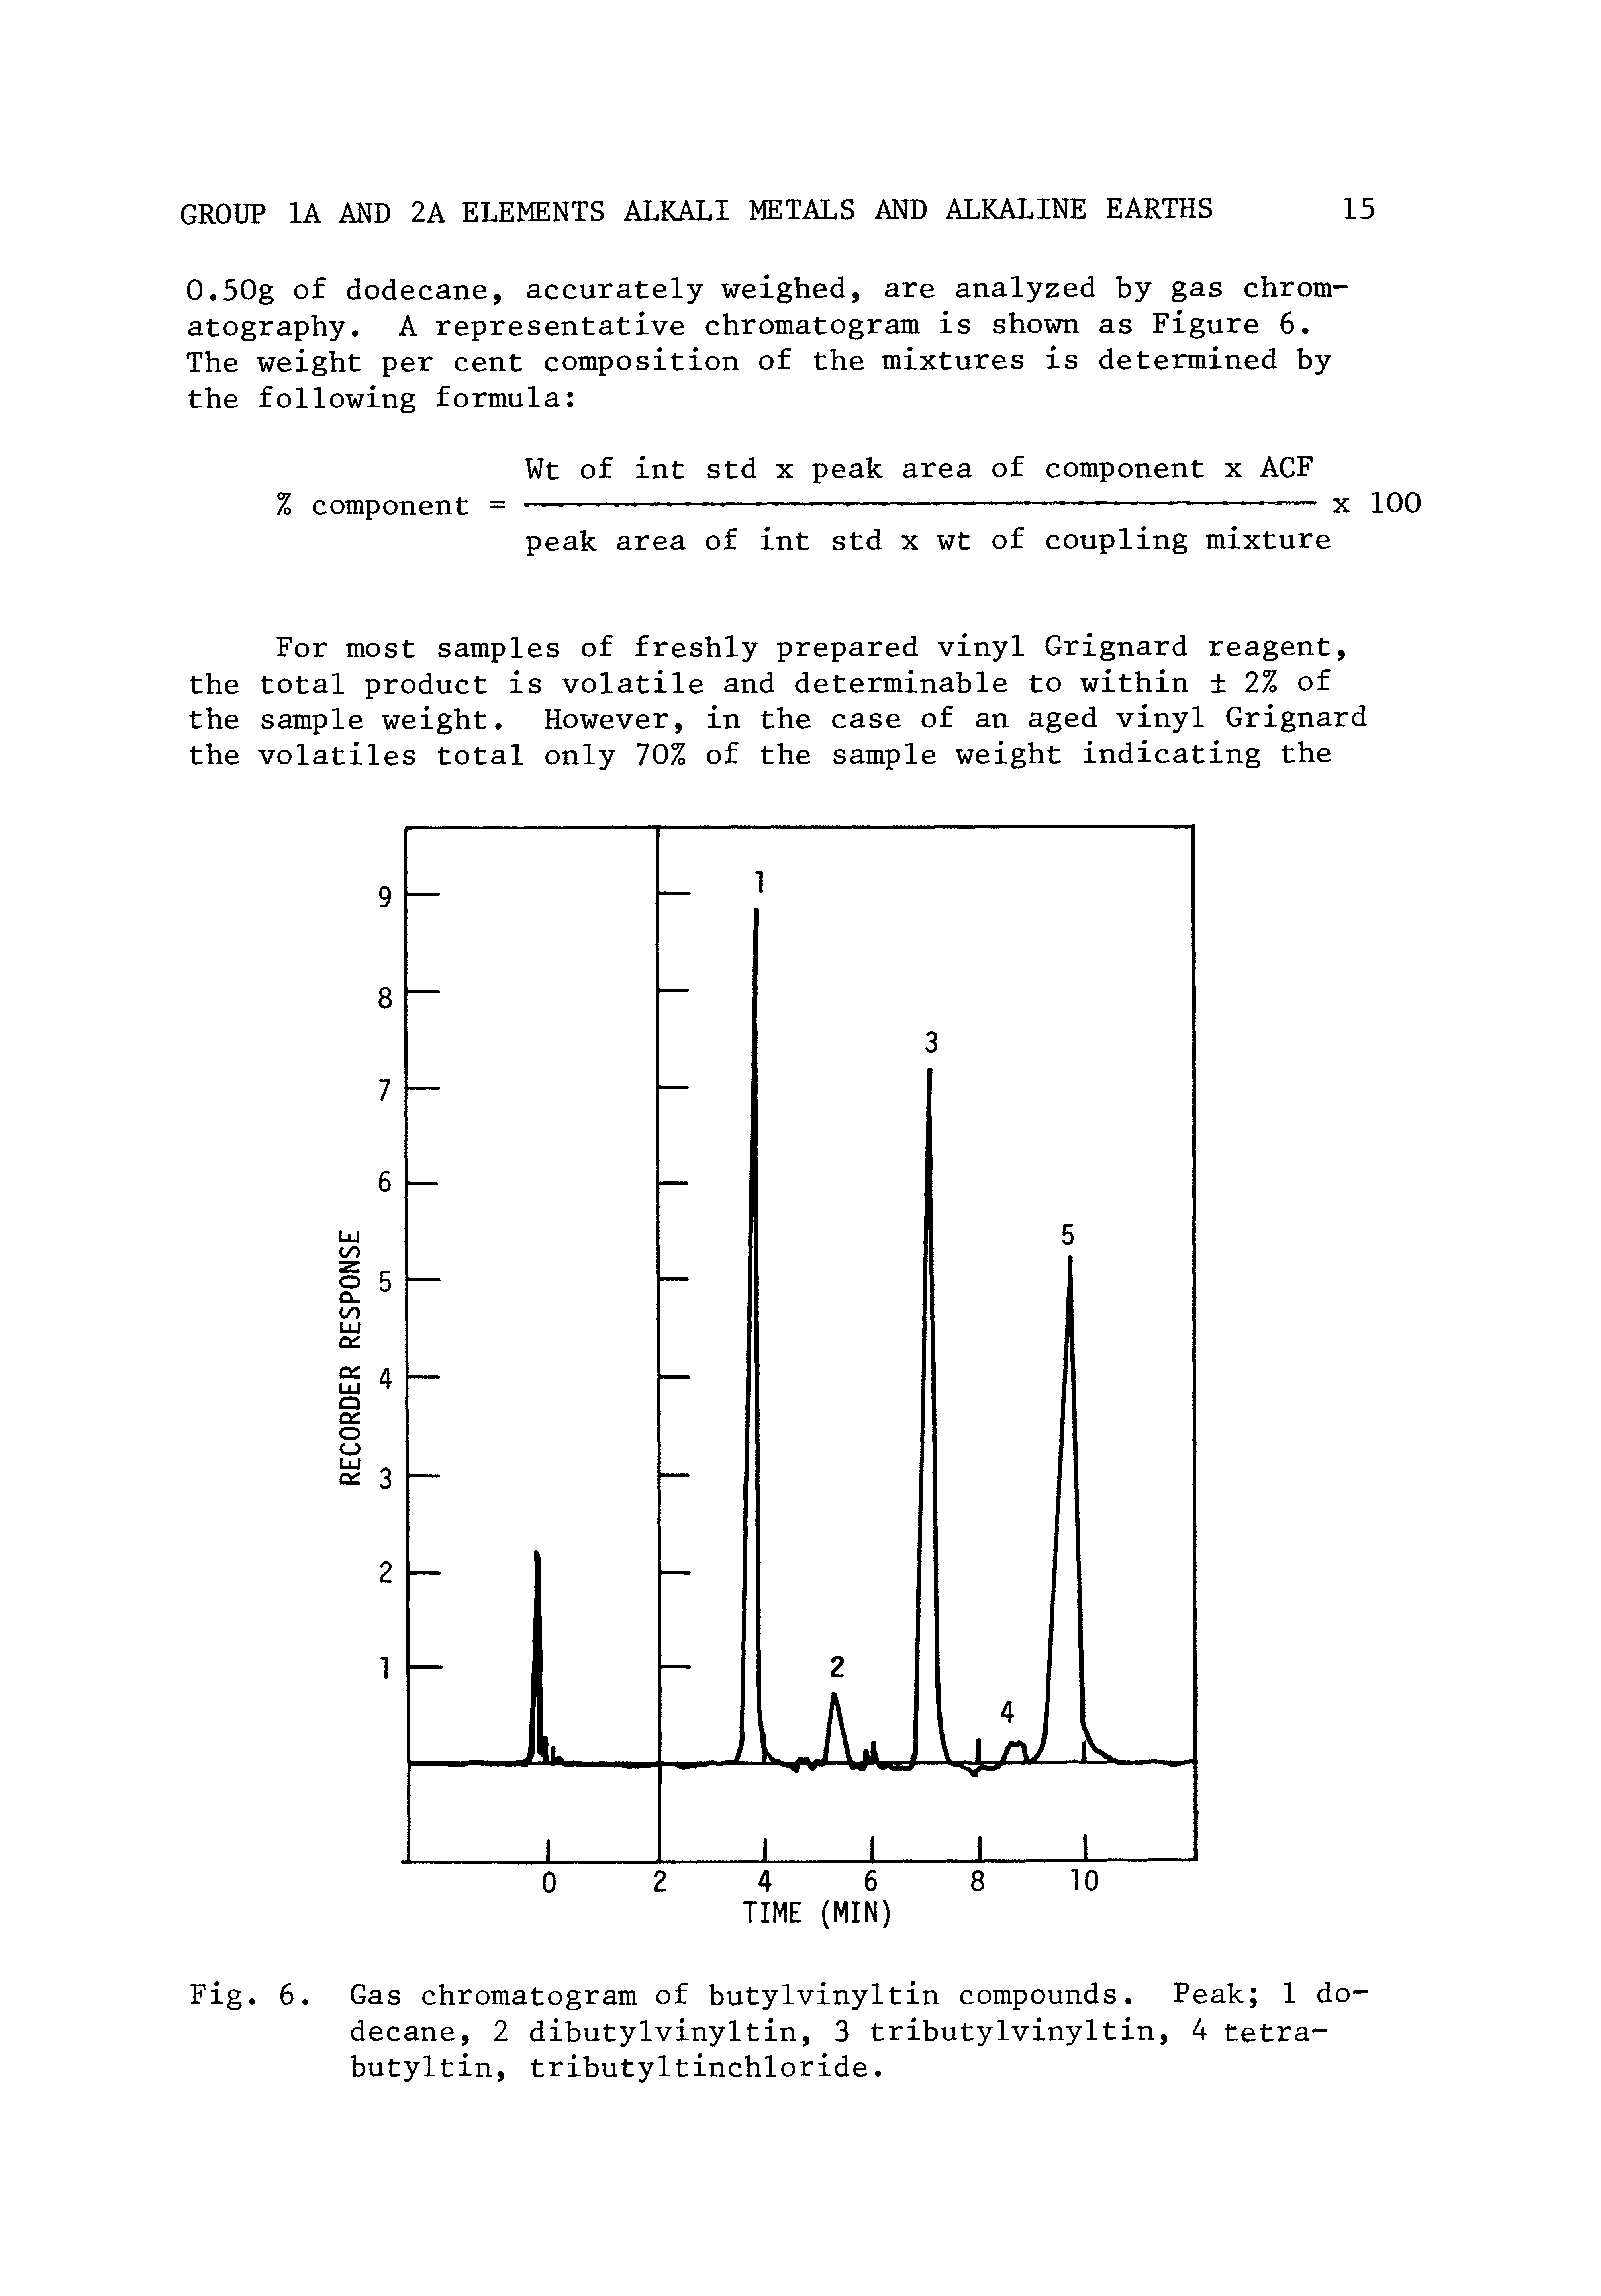 Fig. 6. Gas chromatogram of butylvinyltin compounds. Peak 1 dodecane, 2 dibutylvinyltin, 3 tributylvinyltin, 4 tetra-butyltin, tributyltinchloride.